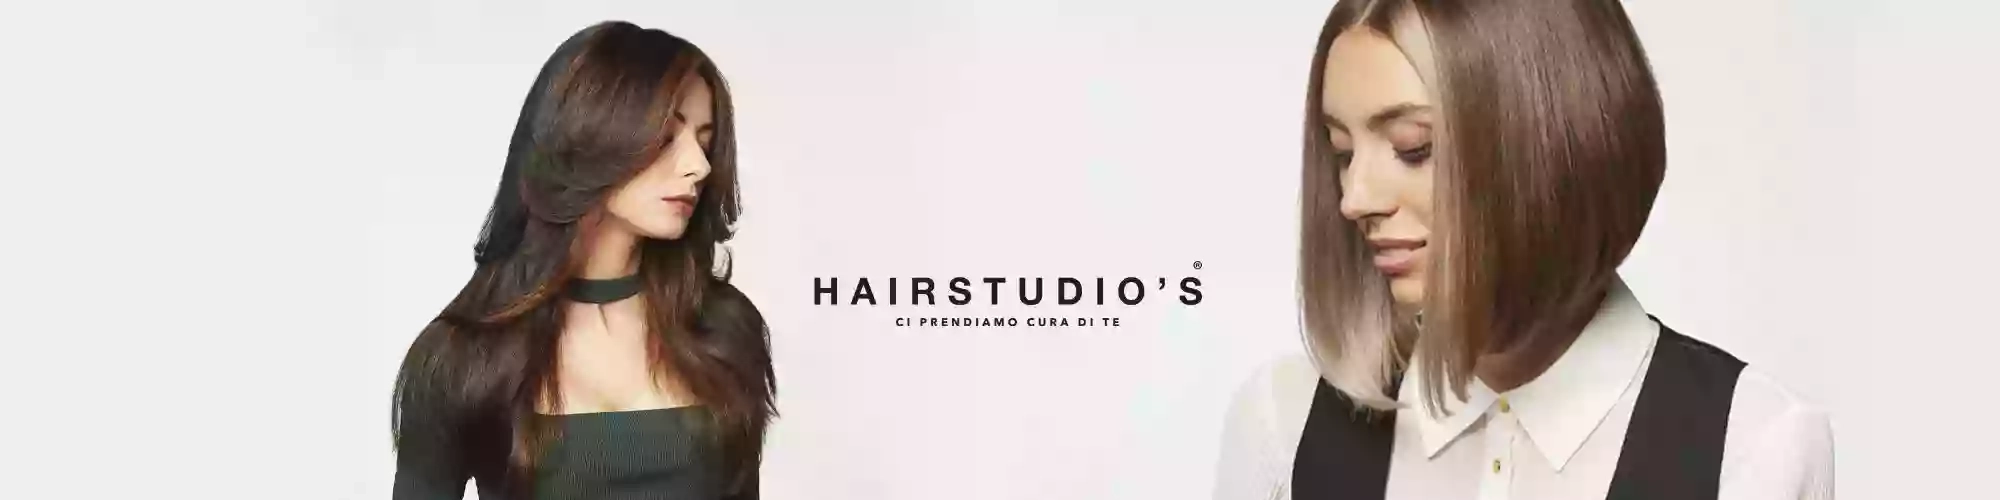 Hairstudio's Bari